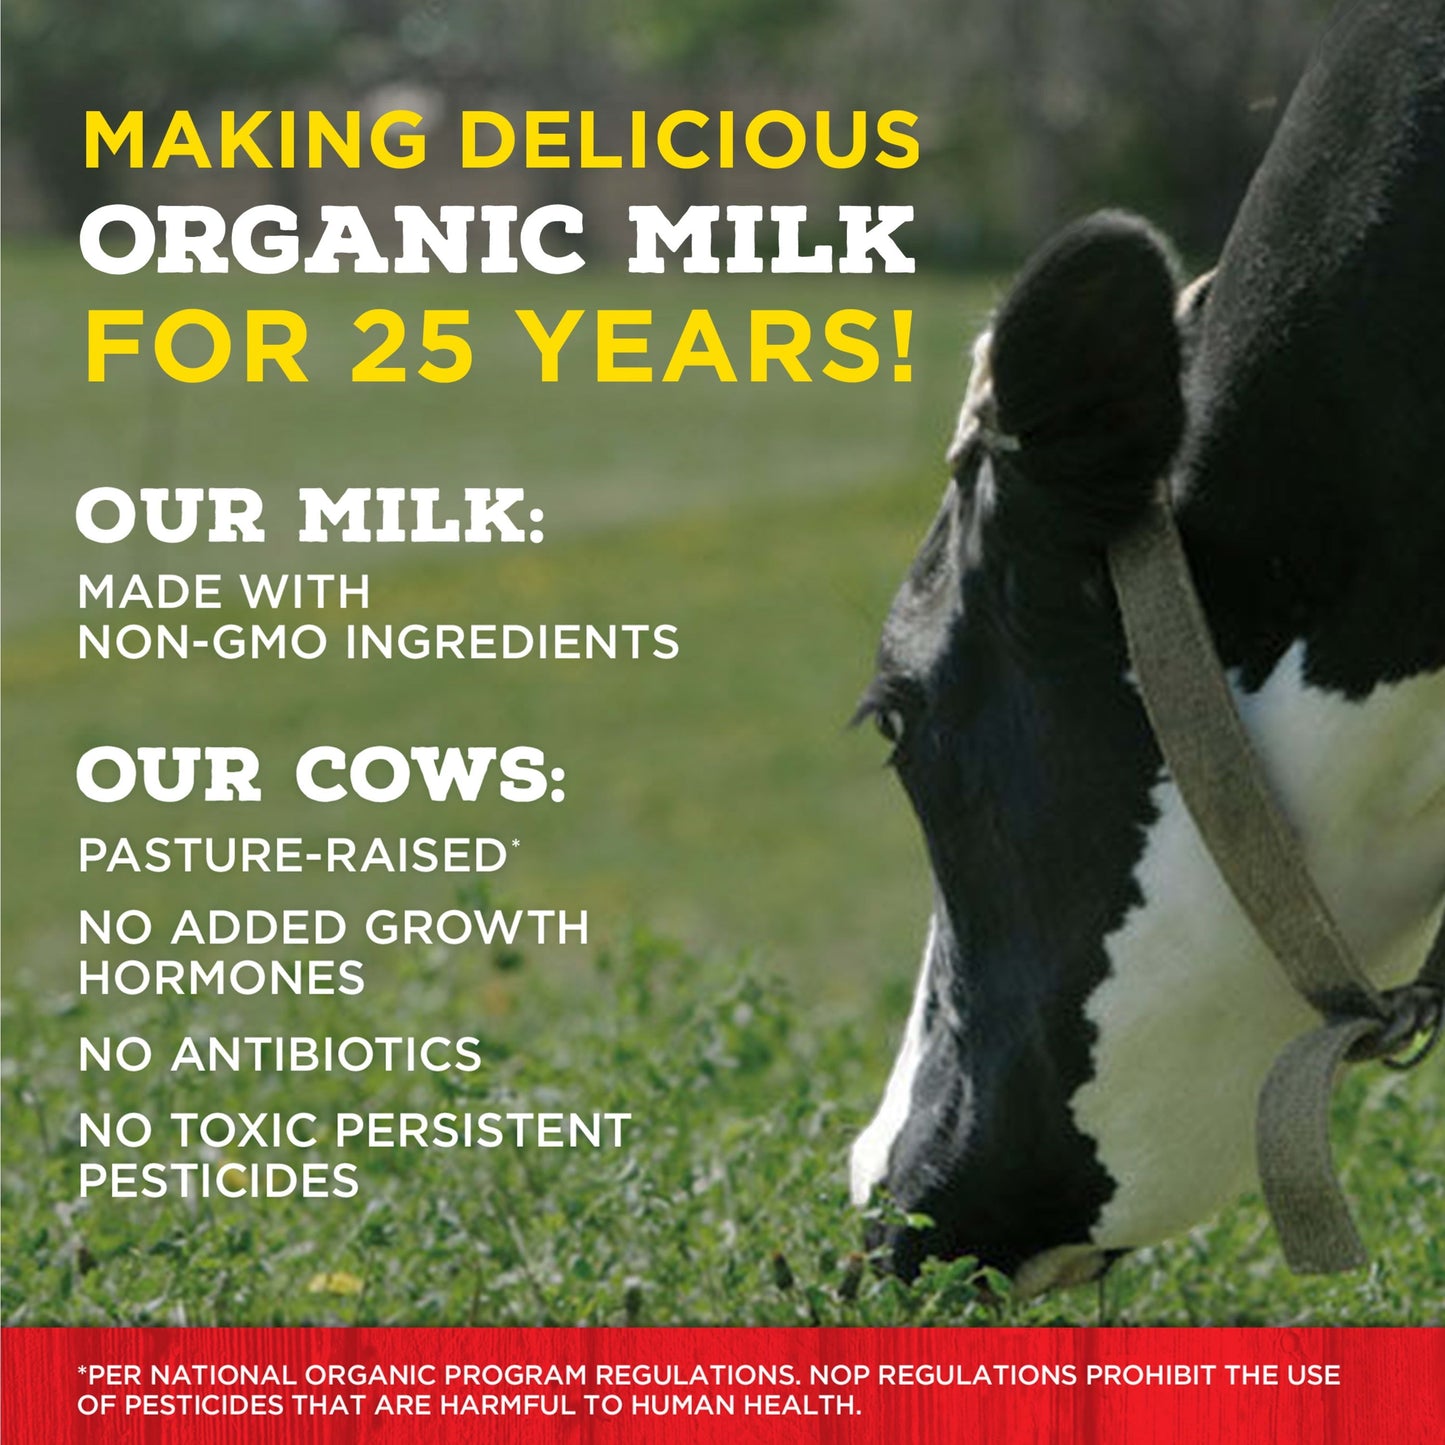 Horizon Organic 2% Reduced Fat DHA Omega-3 Milk, Half Gallon